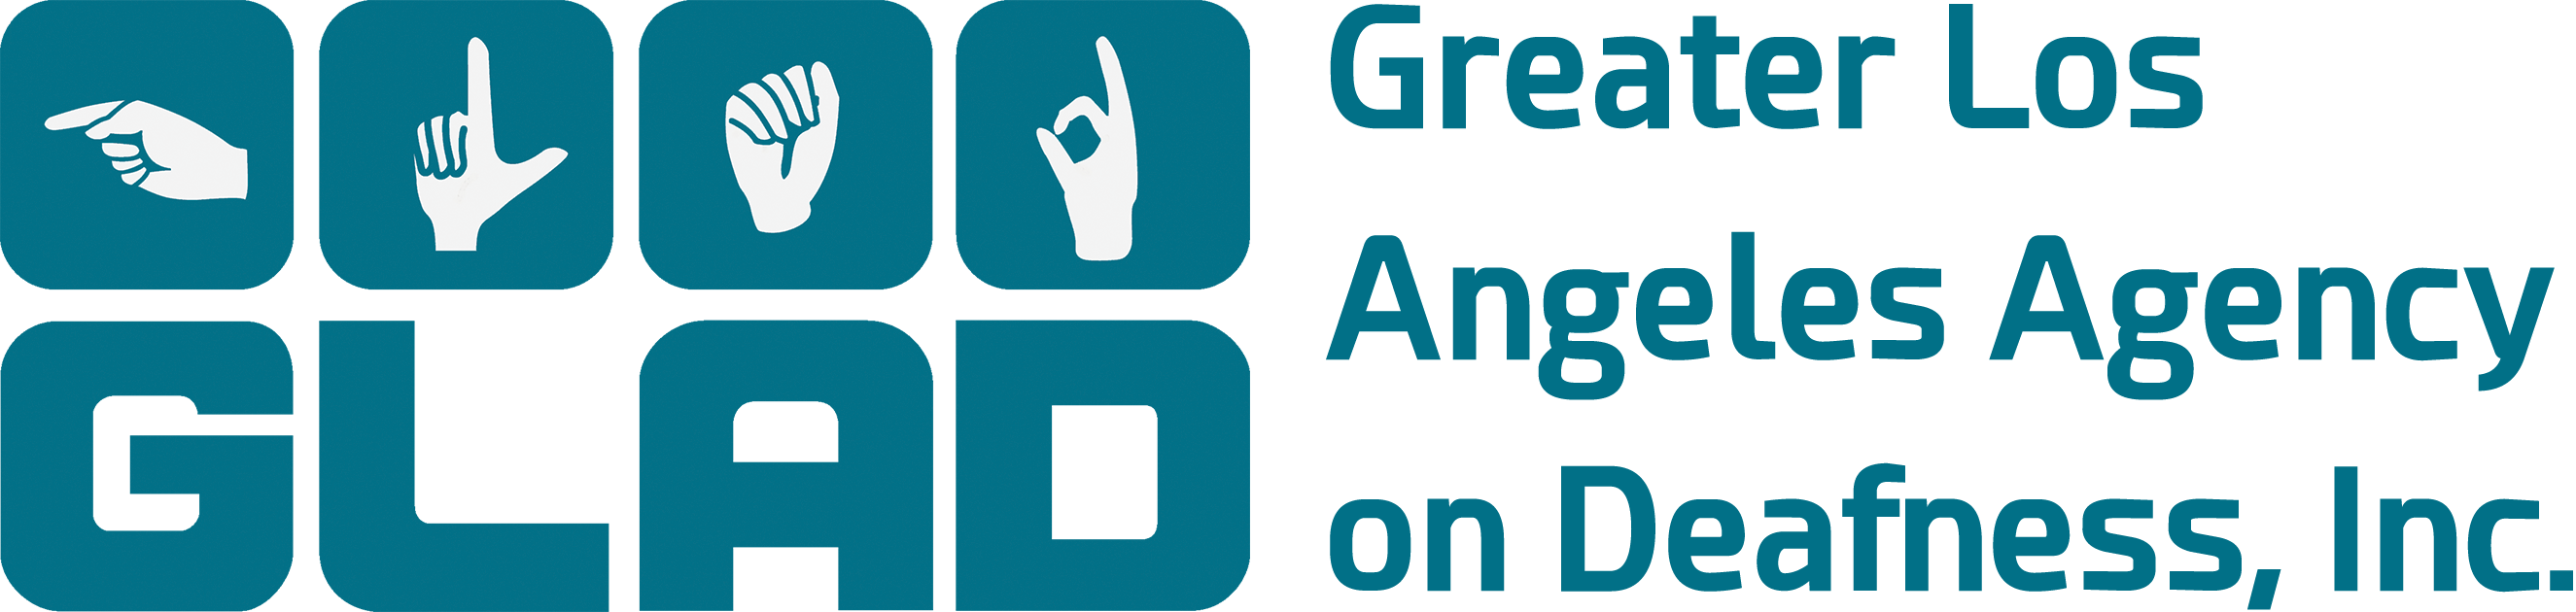 Logo of Greater LosAngeles Agency on Deafness.